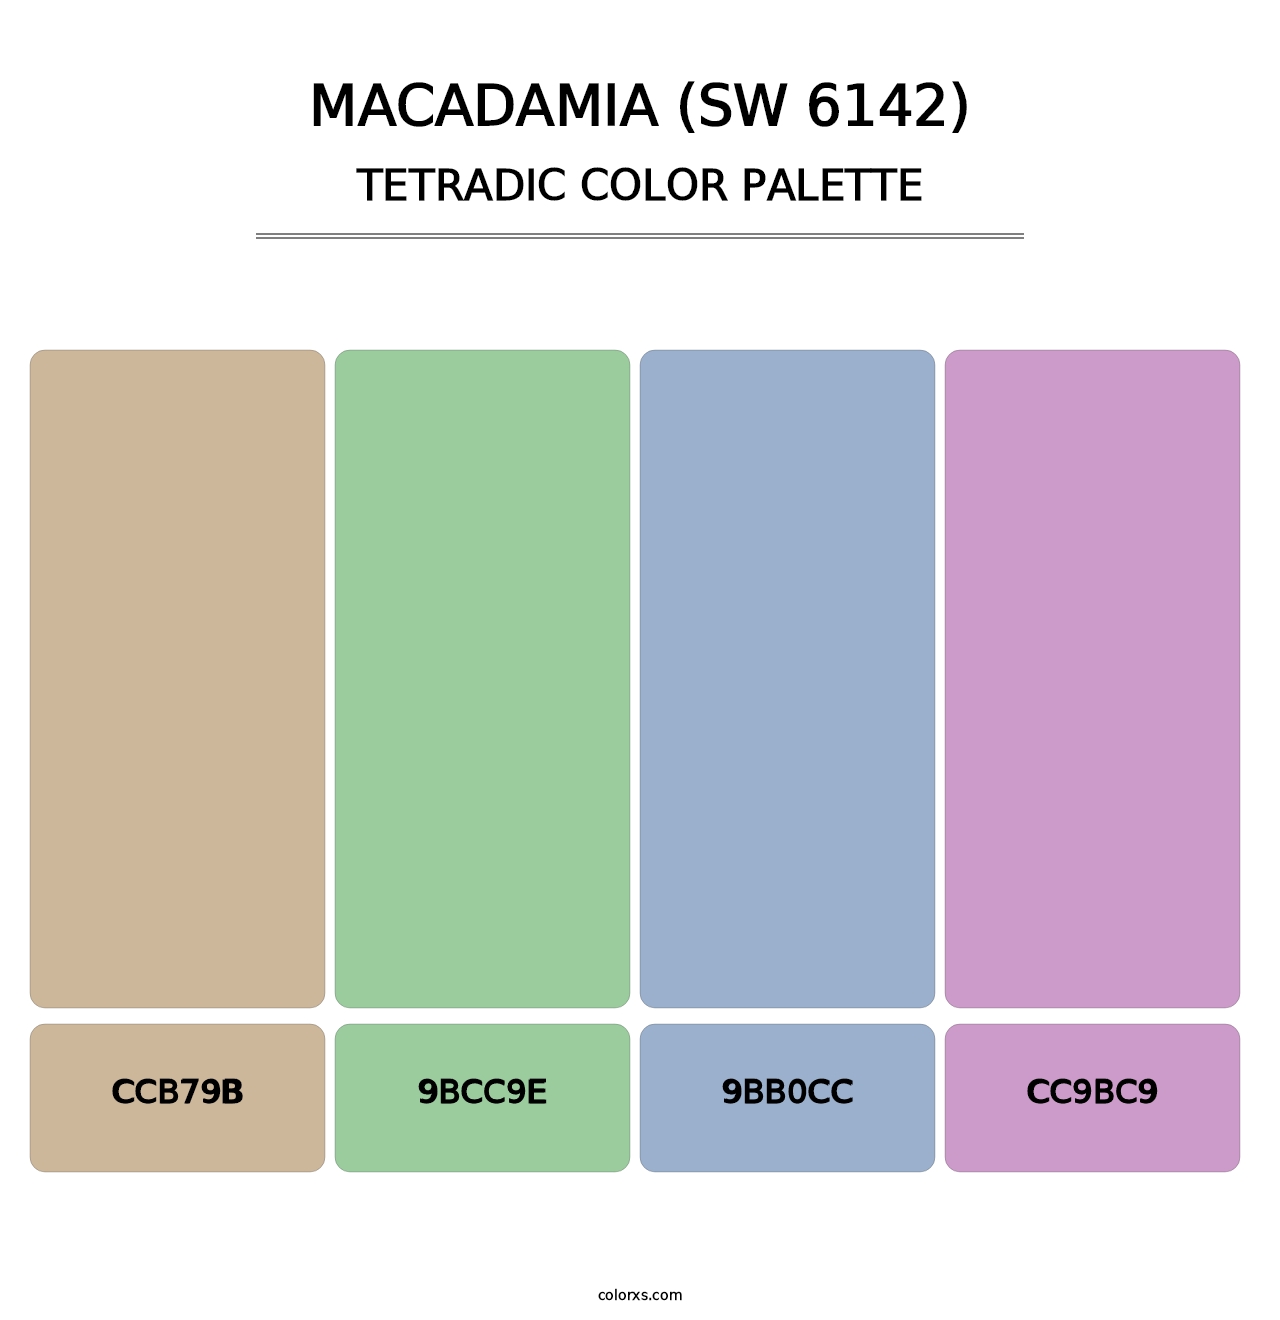 Macadamia (SW 6142) - Tetradic Color Palette